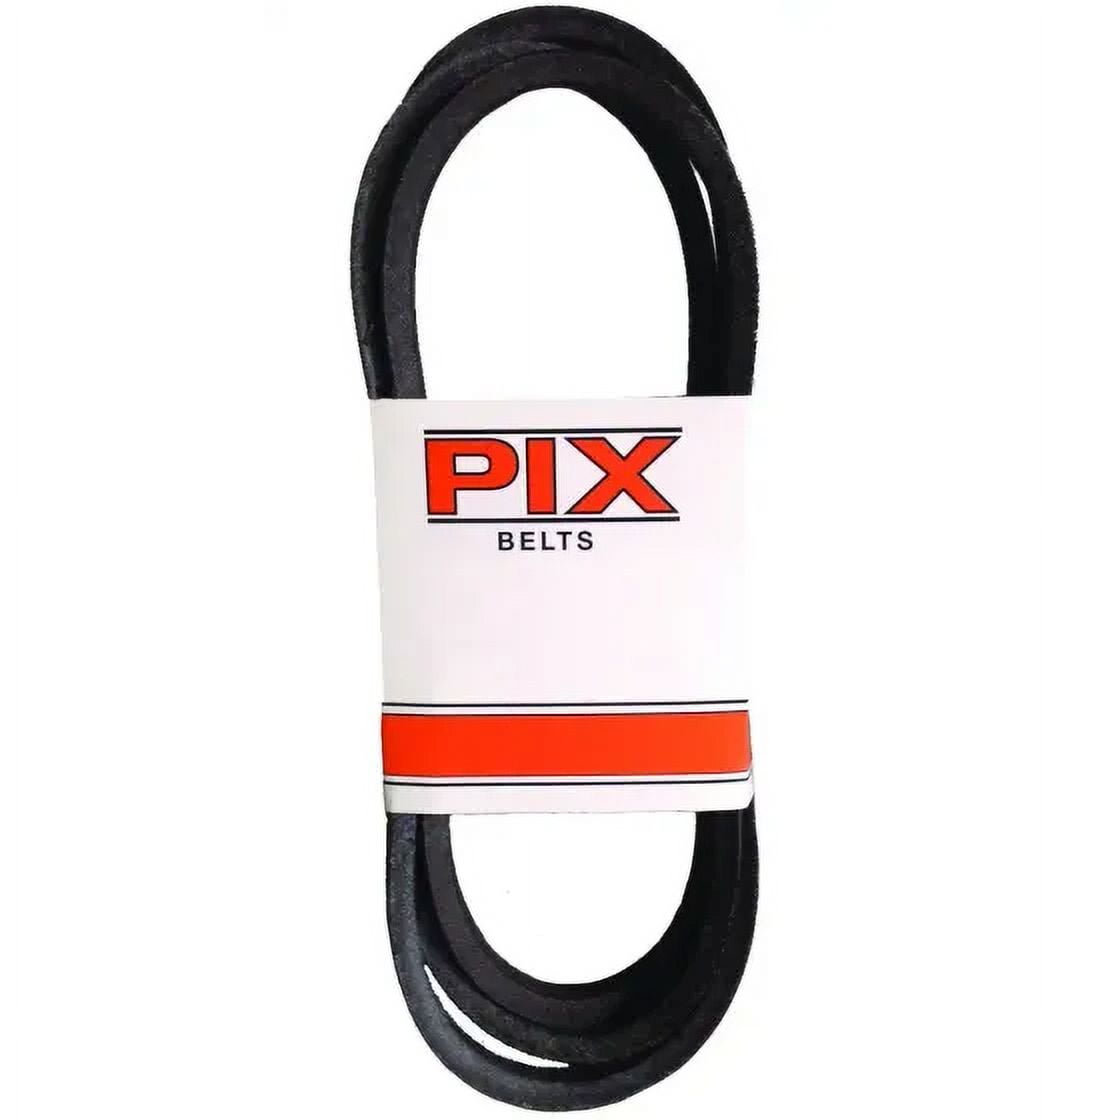 new-pix-b47k-v-belt-5-8-by-50-inch-xdv-walmart